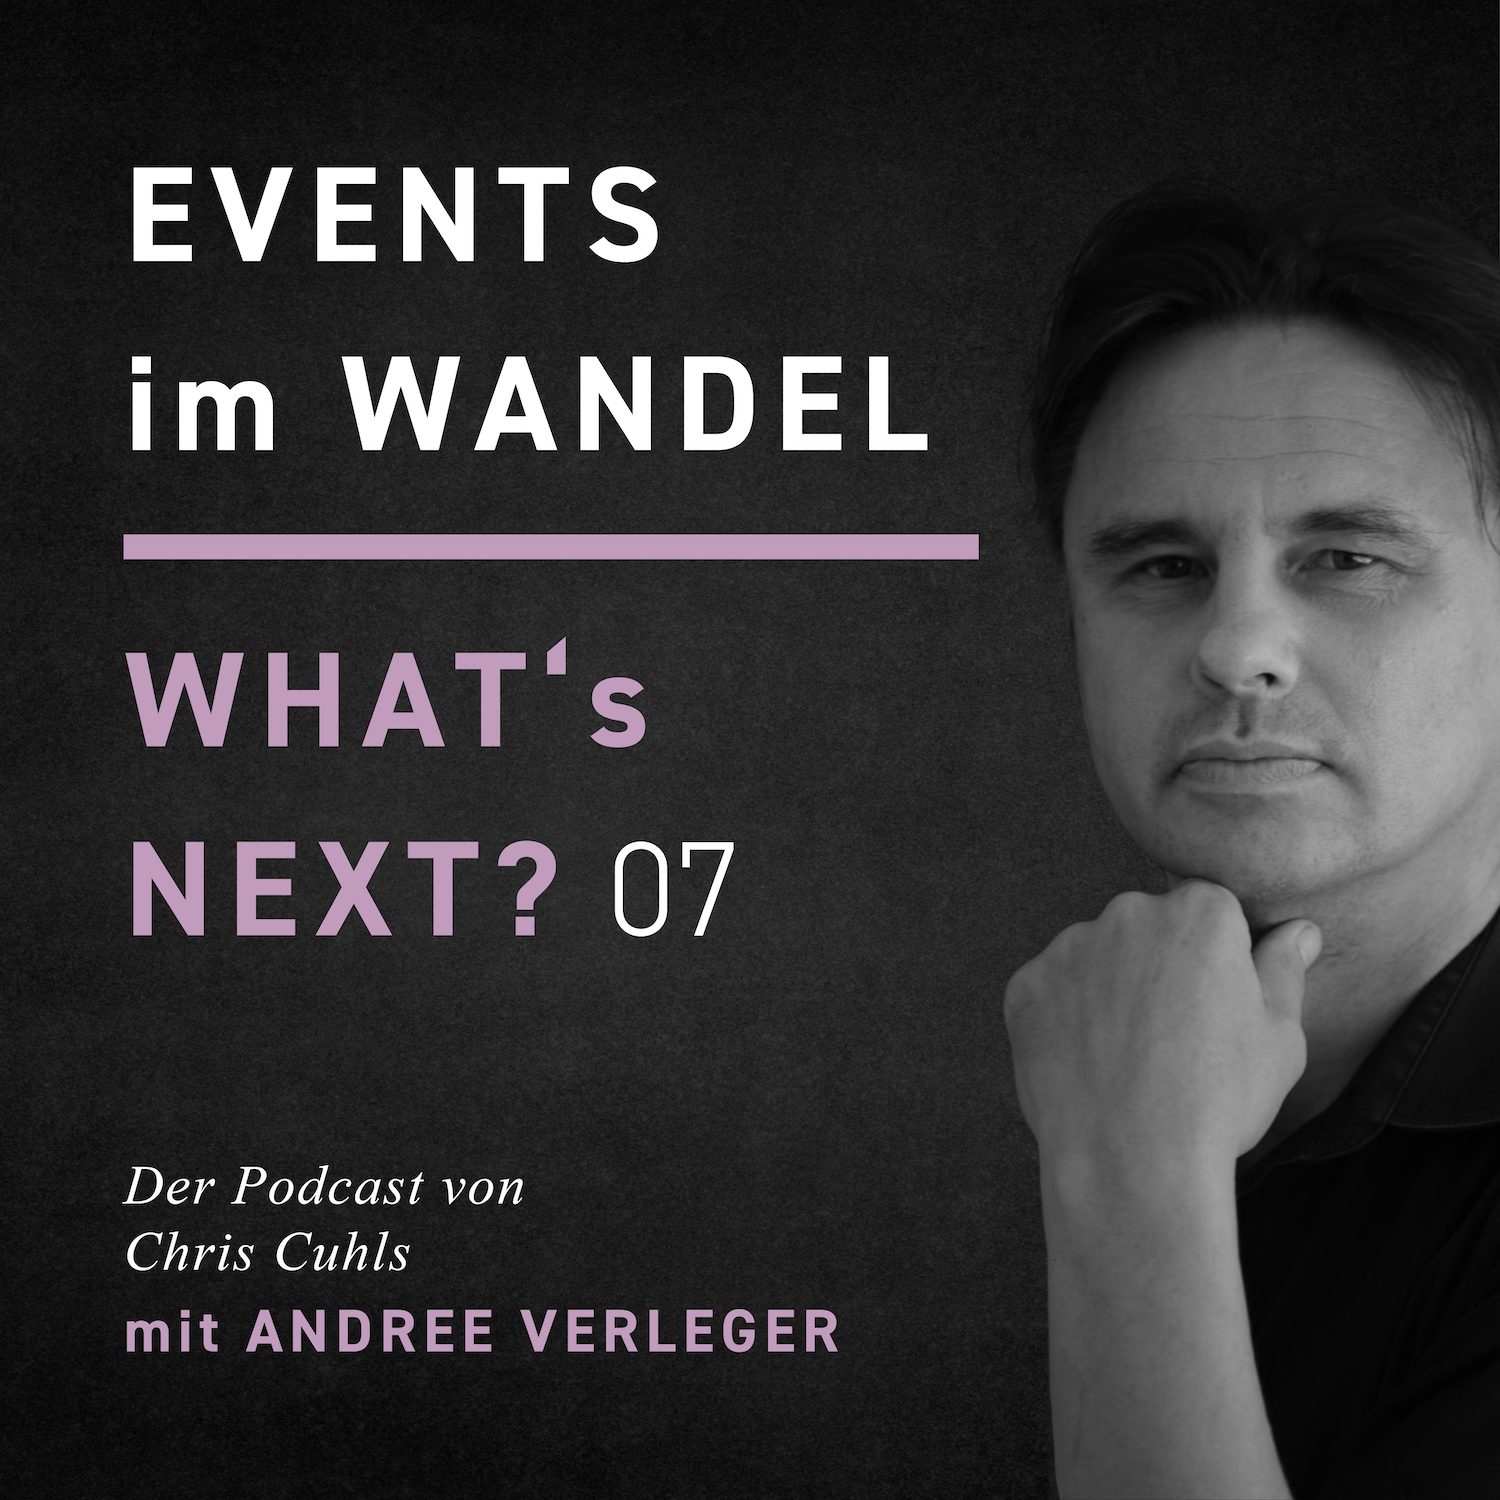 Andree Verleger - Whats next? Events im Wandel